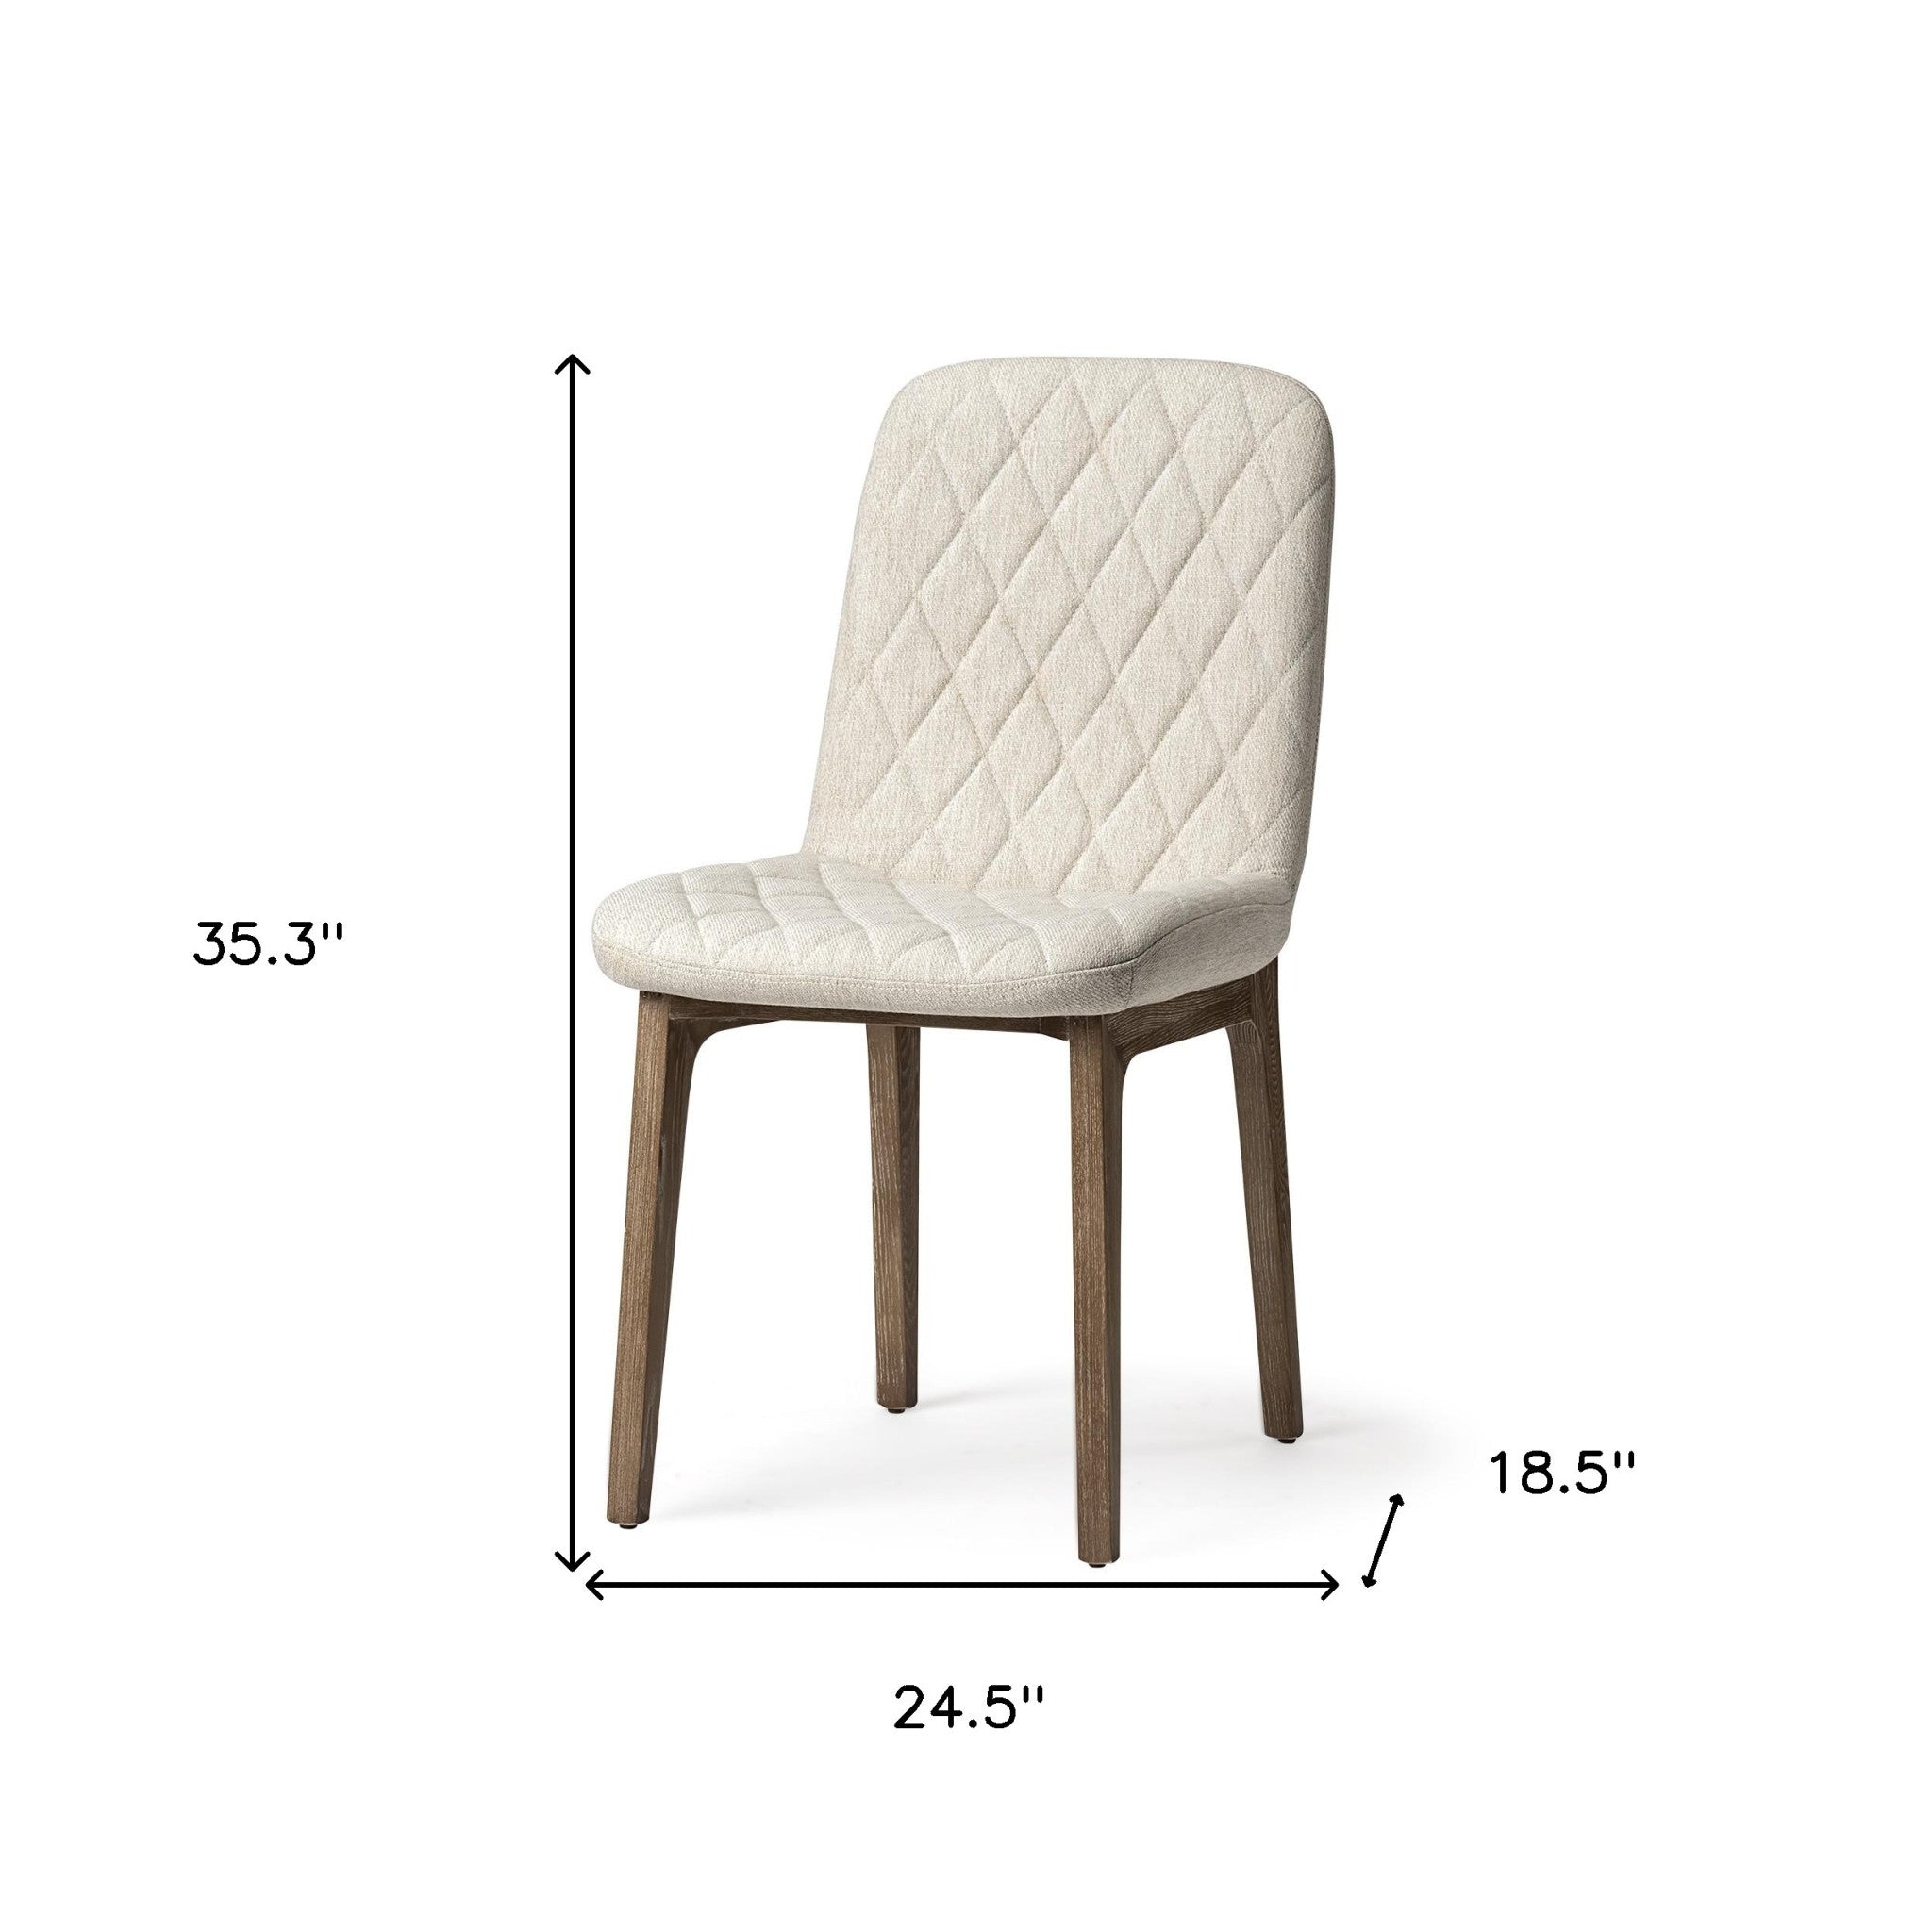 Diamond Tuffed Cream Fabric Wrap With Brown Wood Base Dining Chair